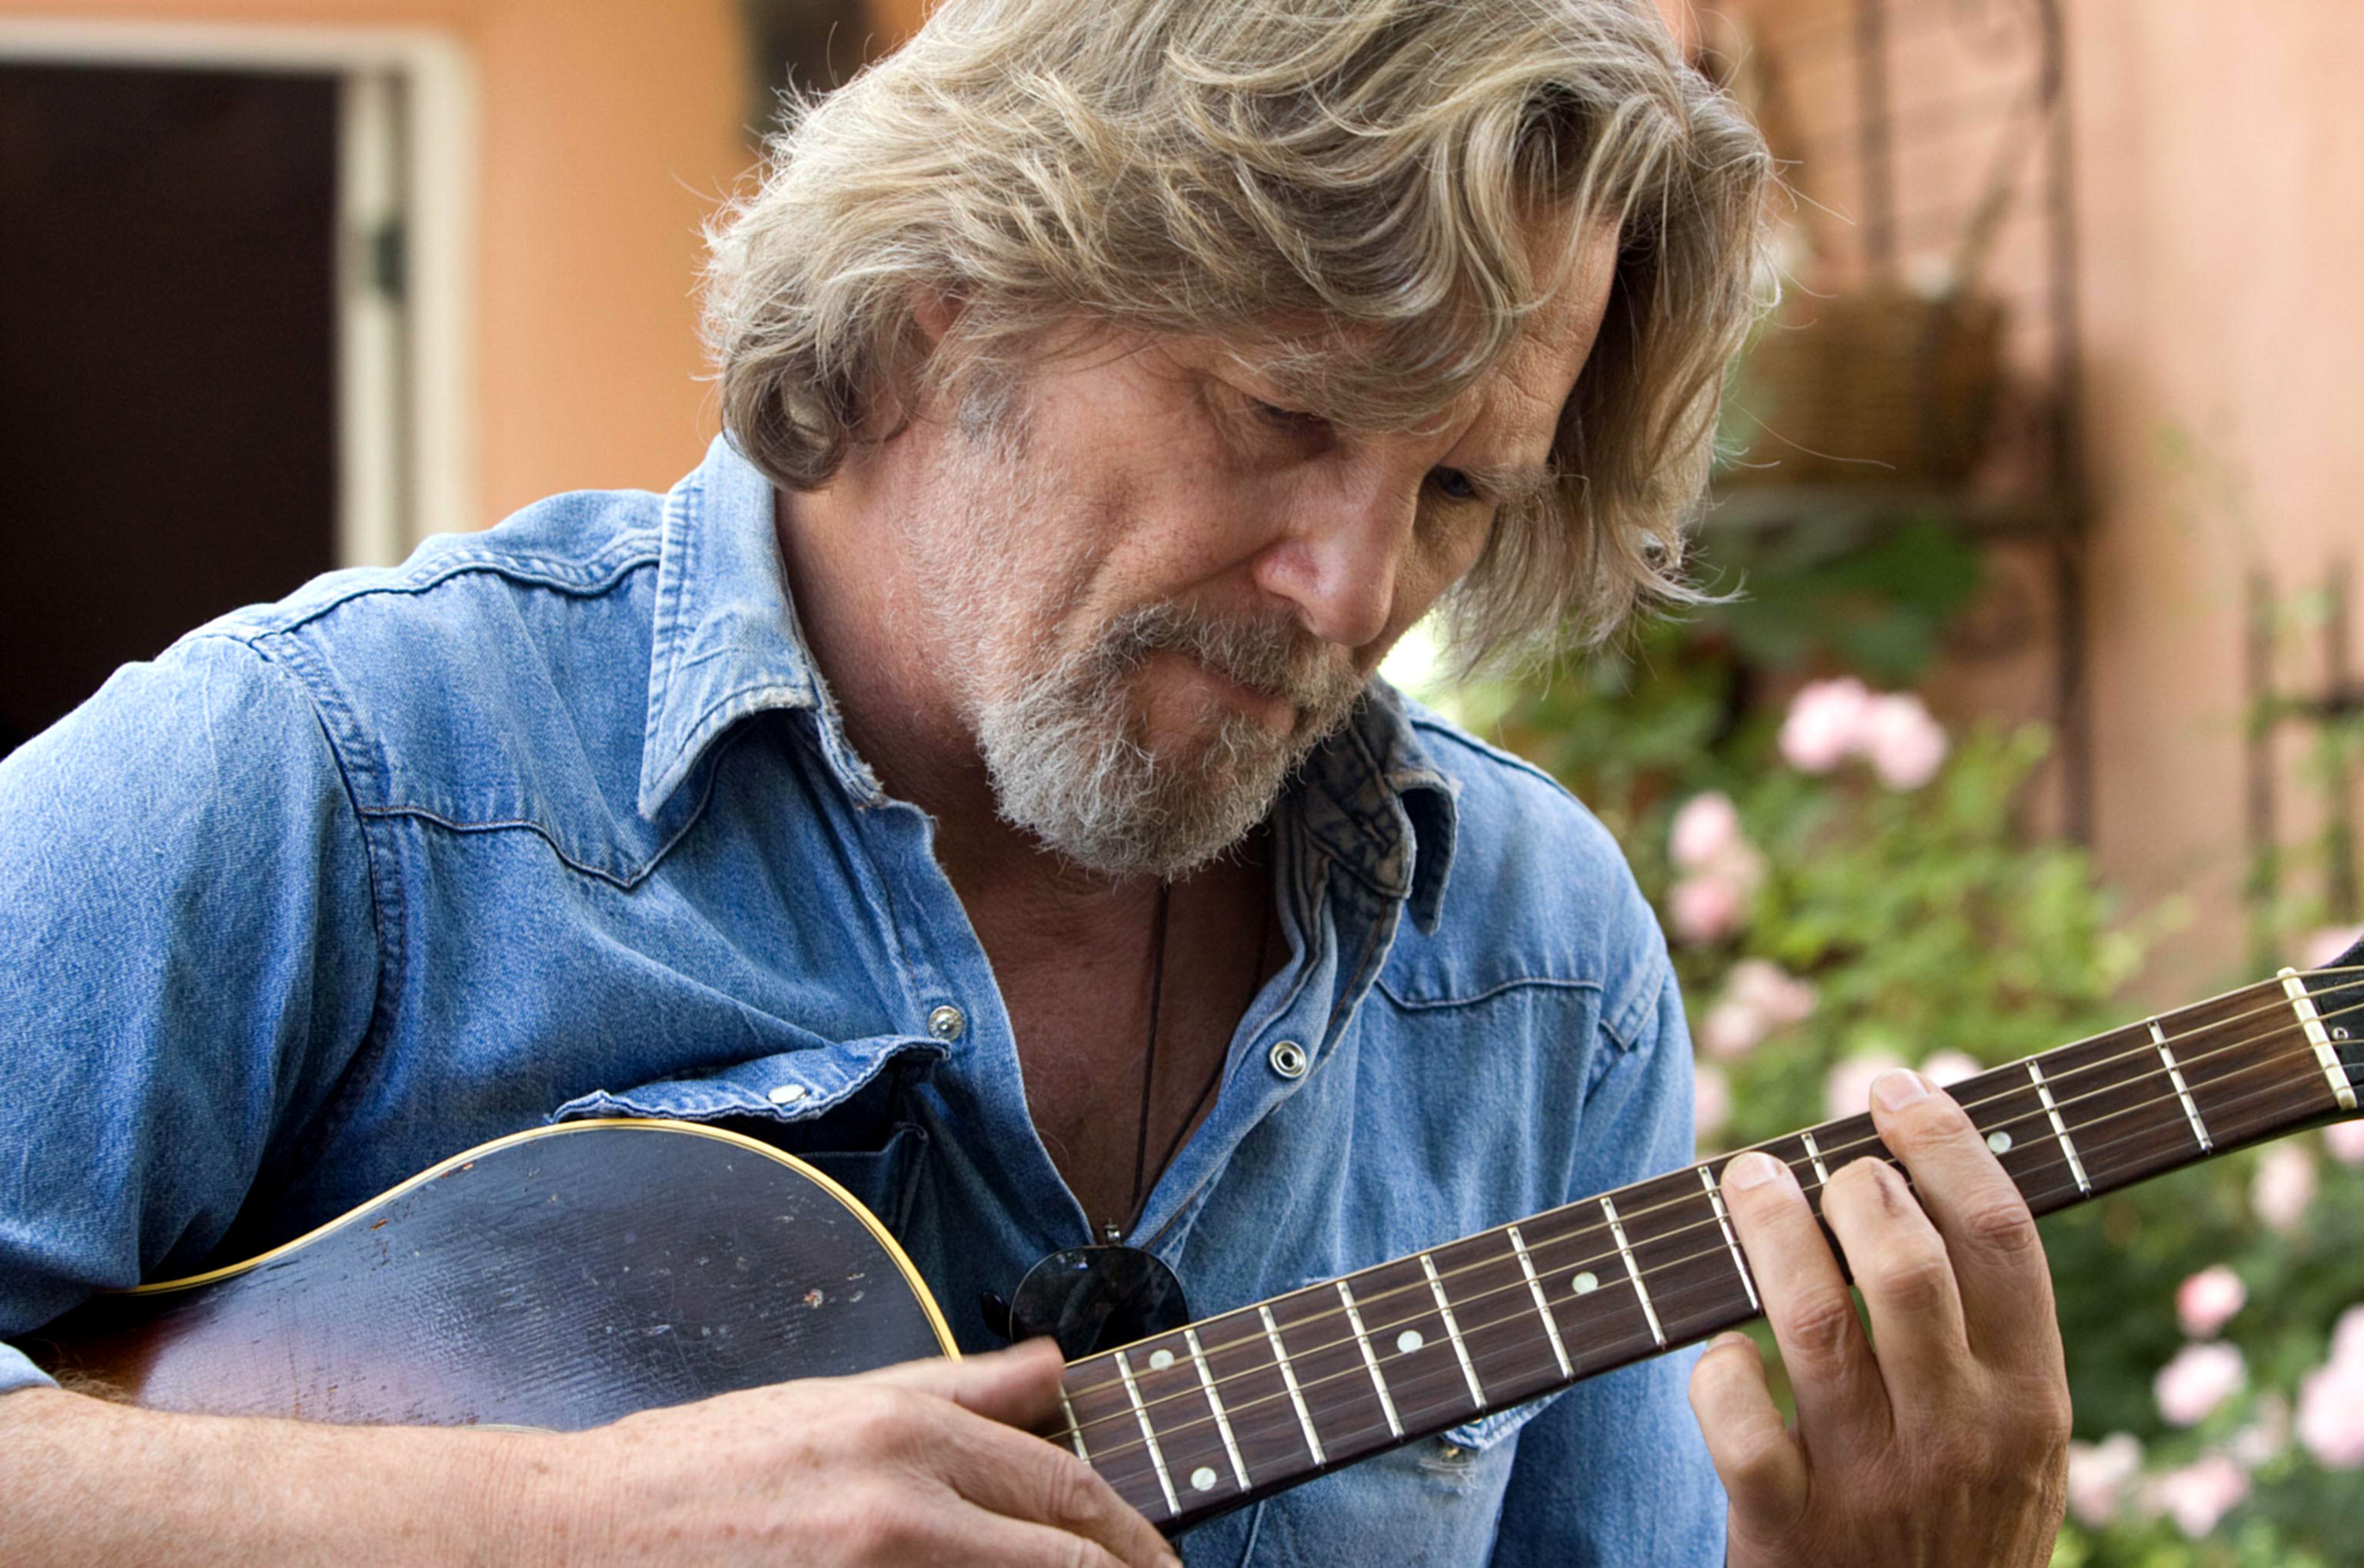 Jeff Bridges plays the guitar